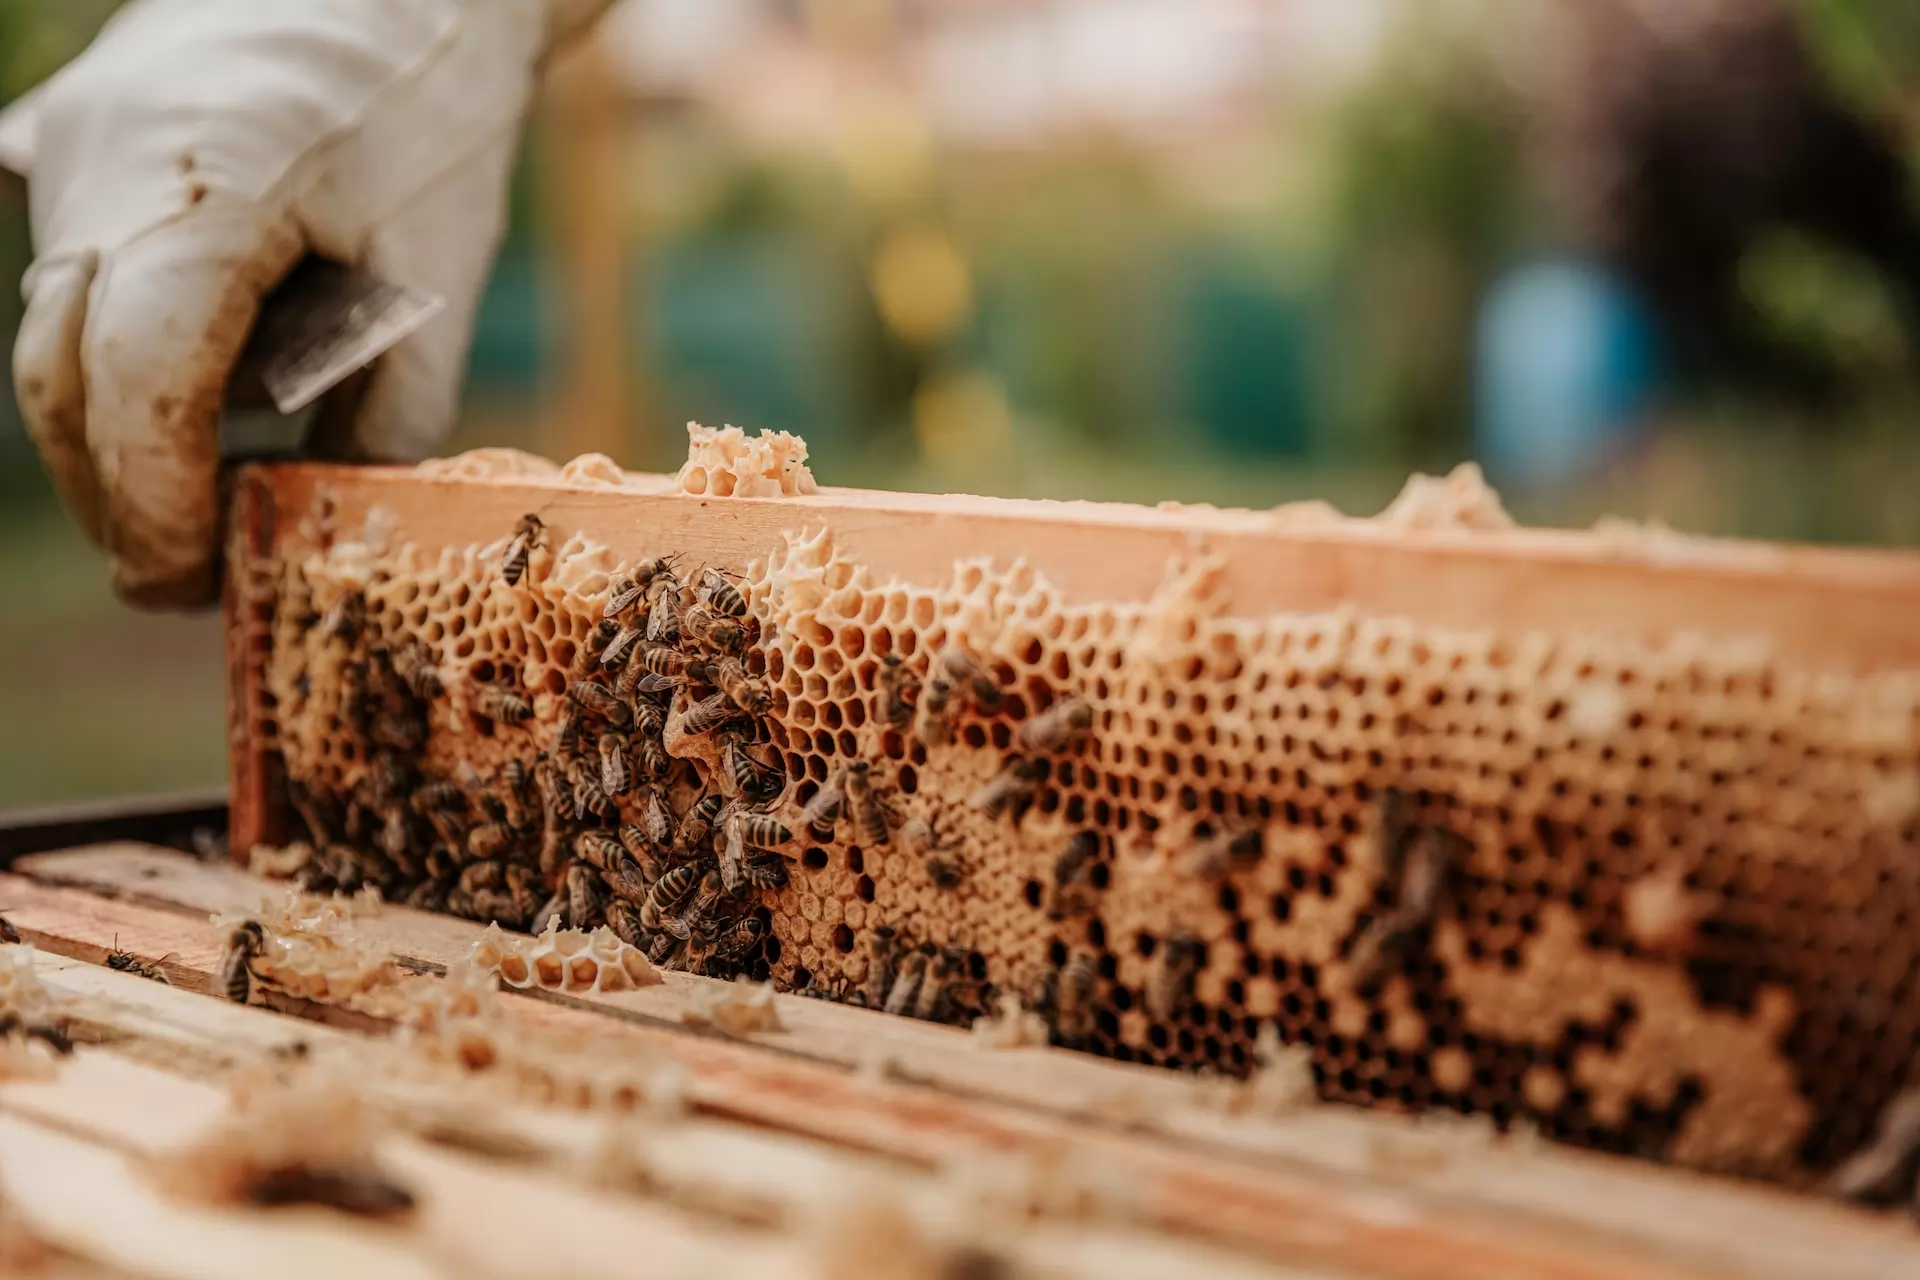 The beekeeping market